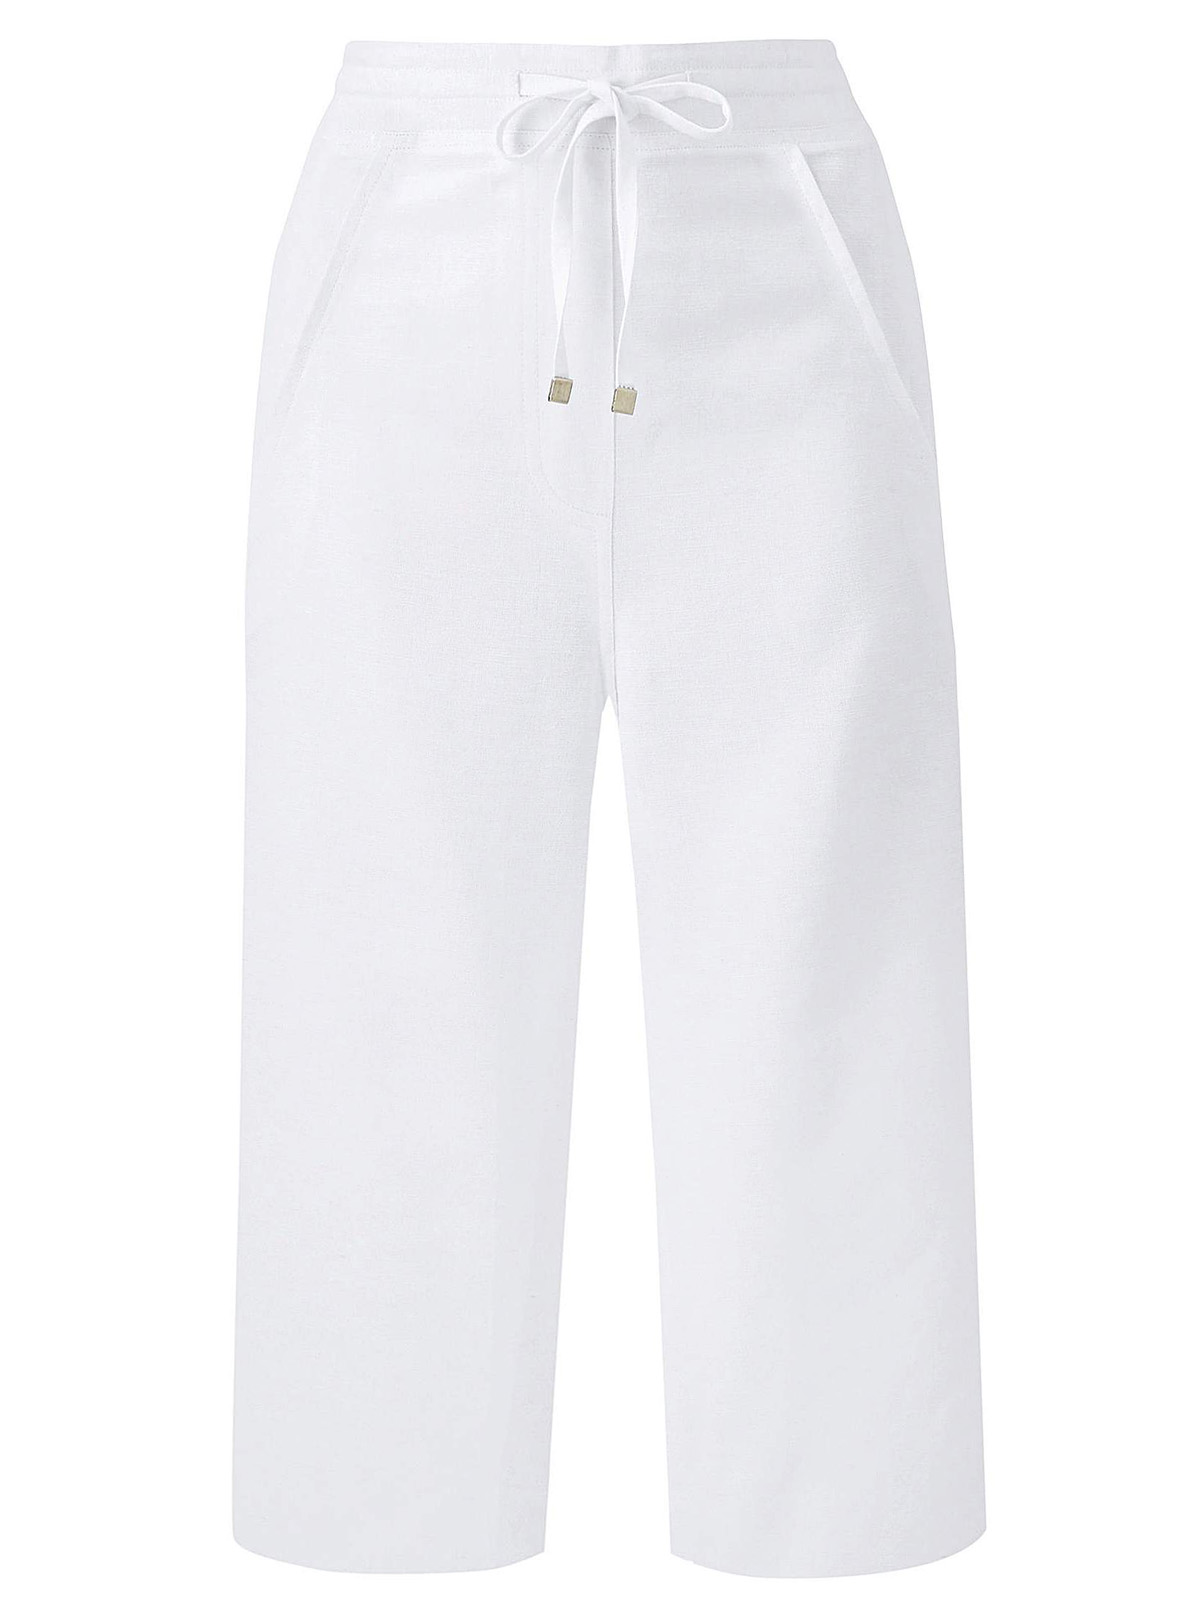 Unbranded Plus Size Capri, Cropped Trouser for Women for sale | eBay